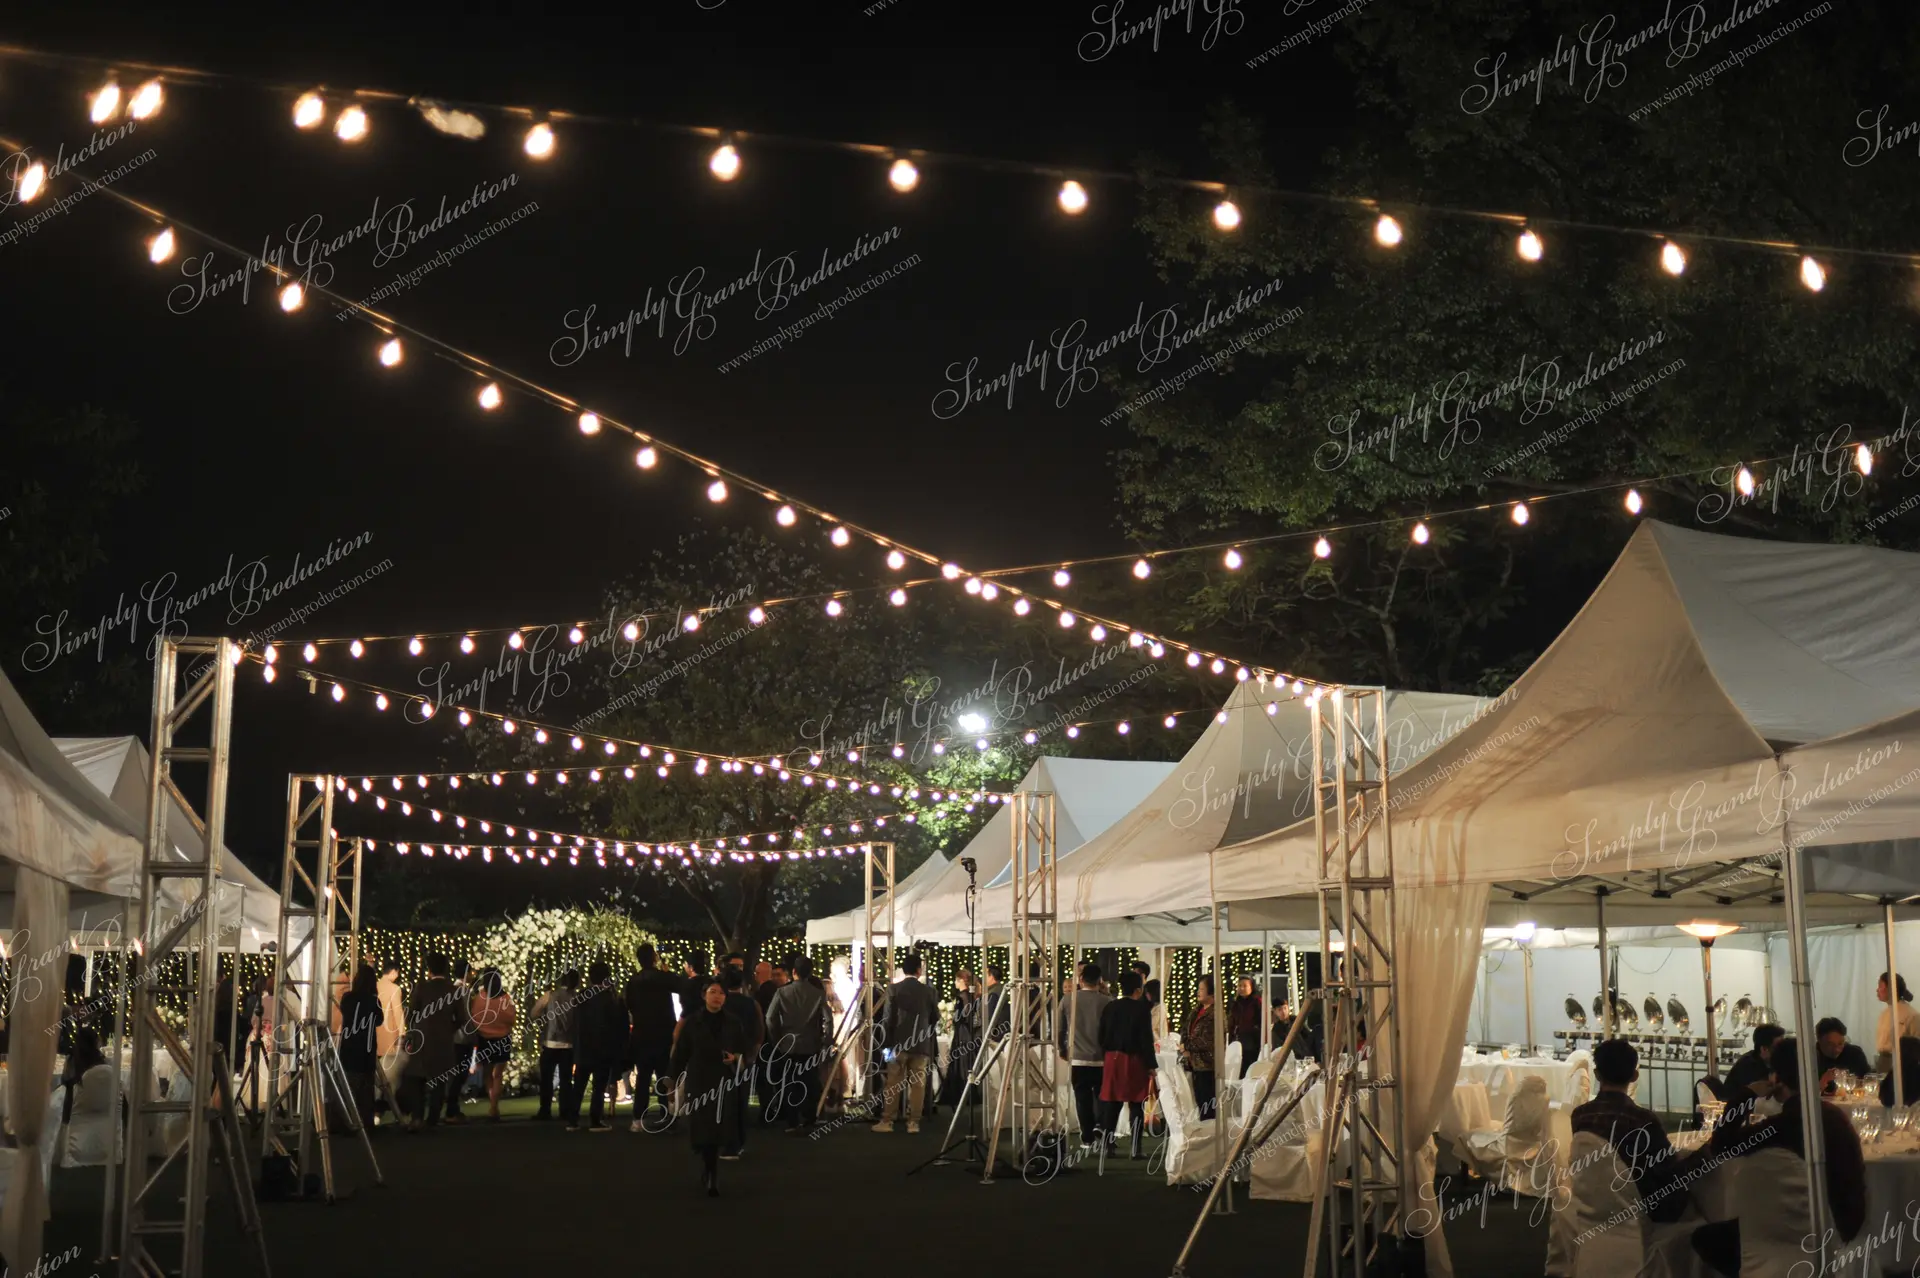 Simply_Grand_Production_Outdoor_wedding_decoration_beas river_festoon lights_4.jpg